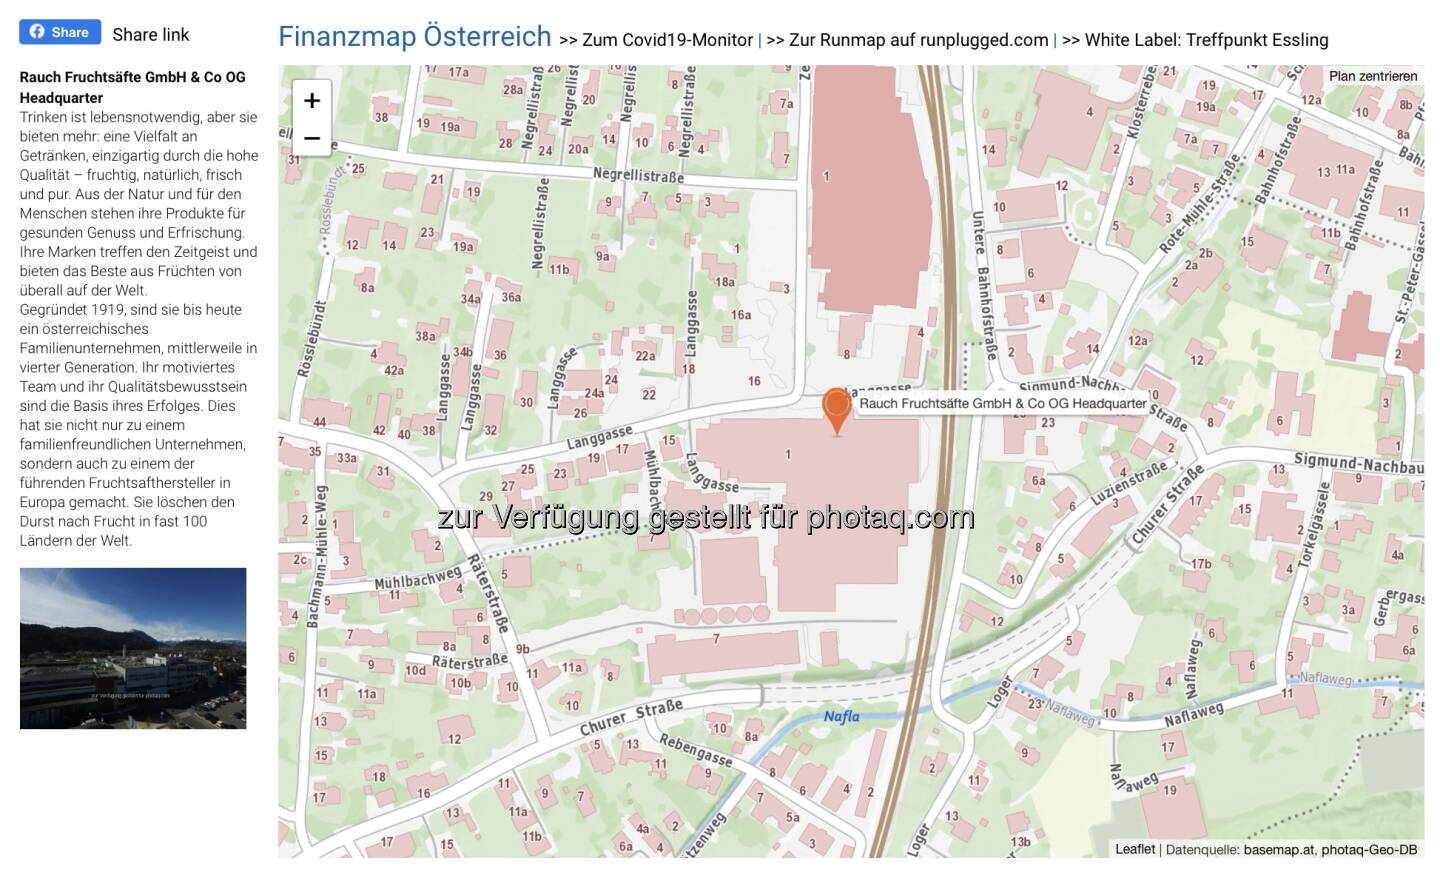 Ort des Tages: Rauch Fruchtsäfte GmbH & Co OG Headquarter auf http://www.boerse-social.com/finanzmap